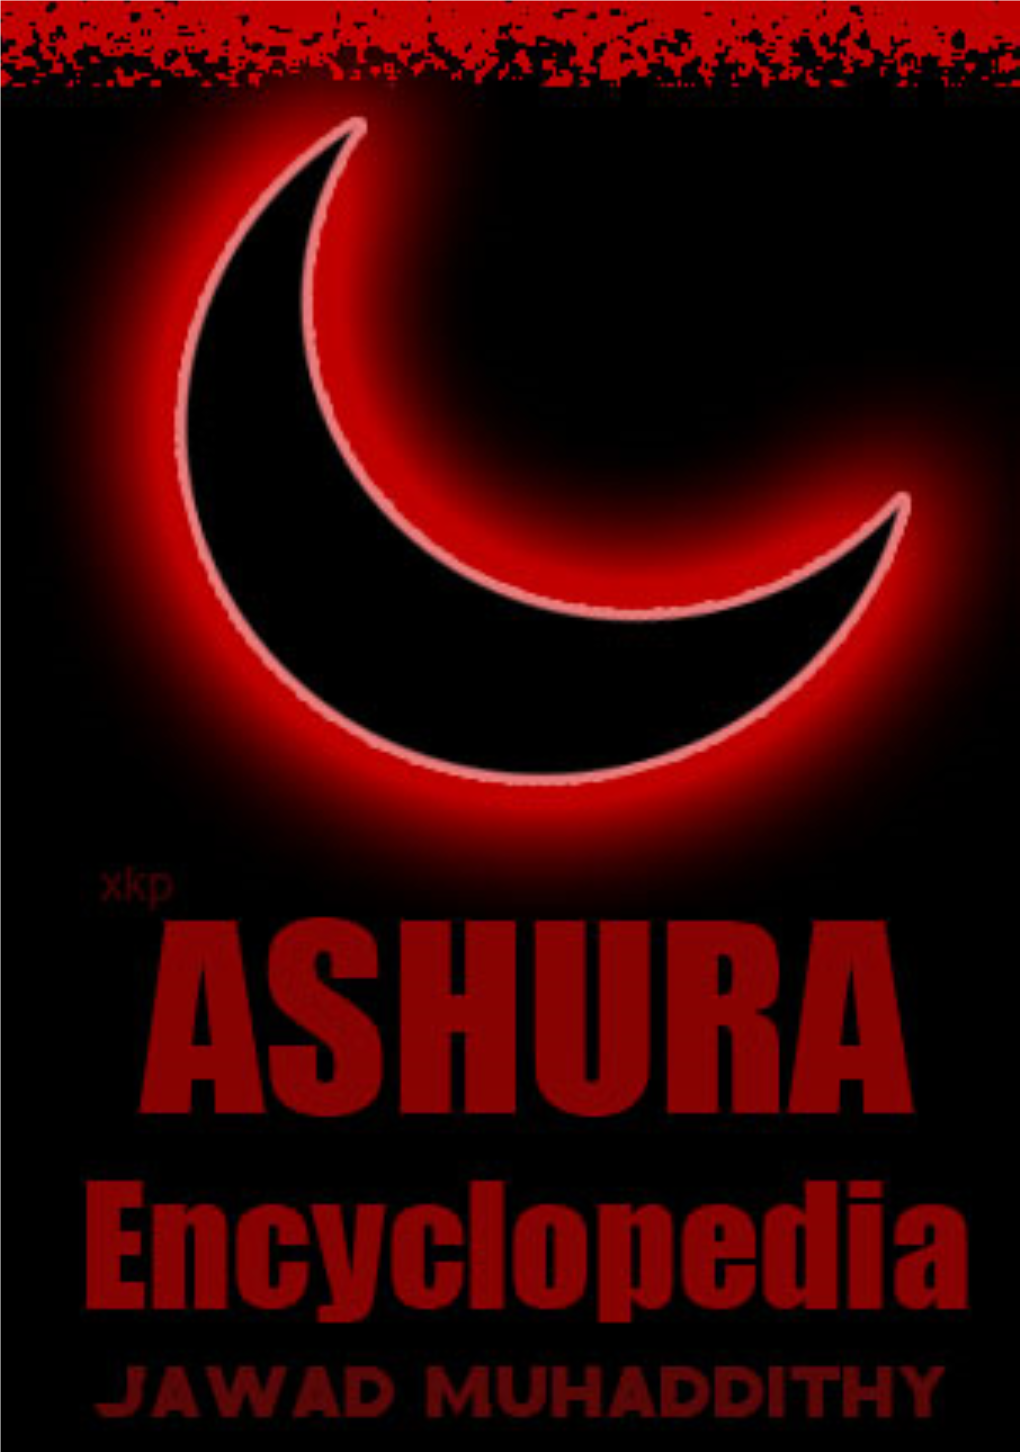 Ashura Encyclopedia